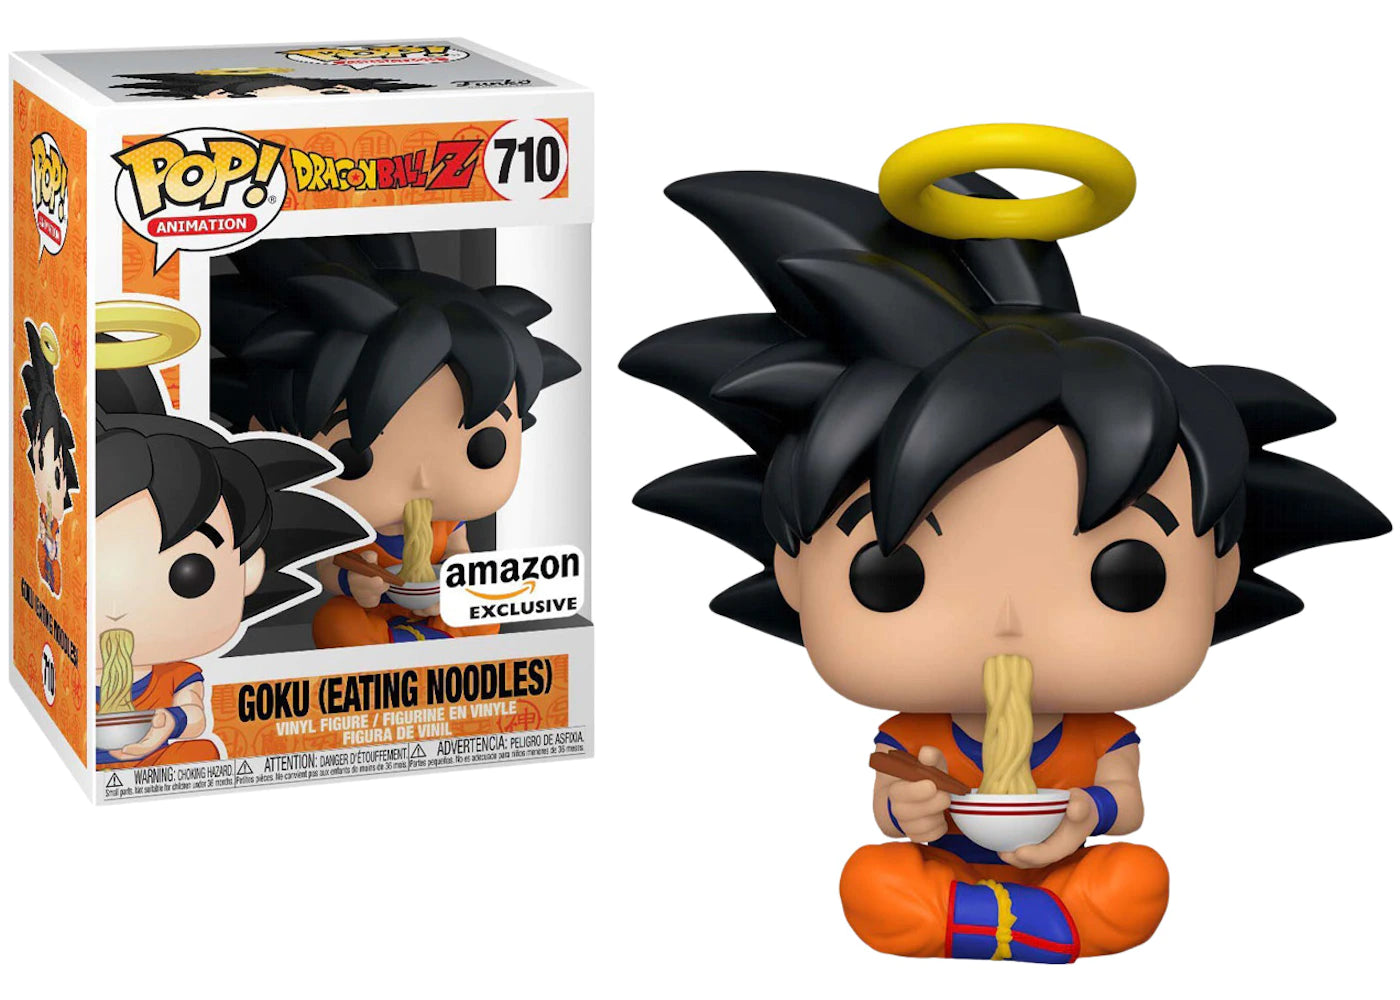 Funko Pop! Animation - Dragon Ball Z - Goku (Eating Noodles) - Amazon - 710